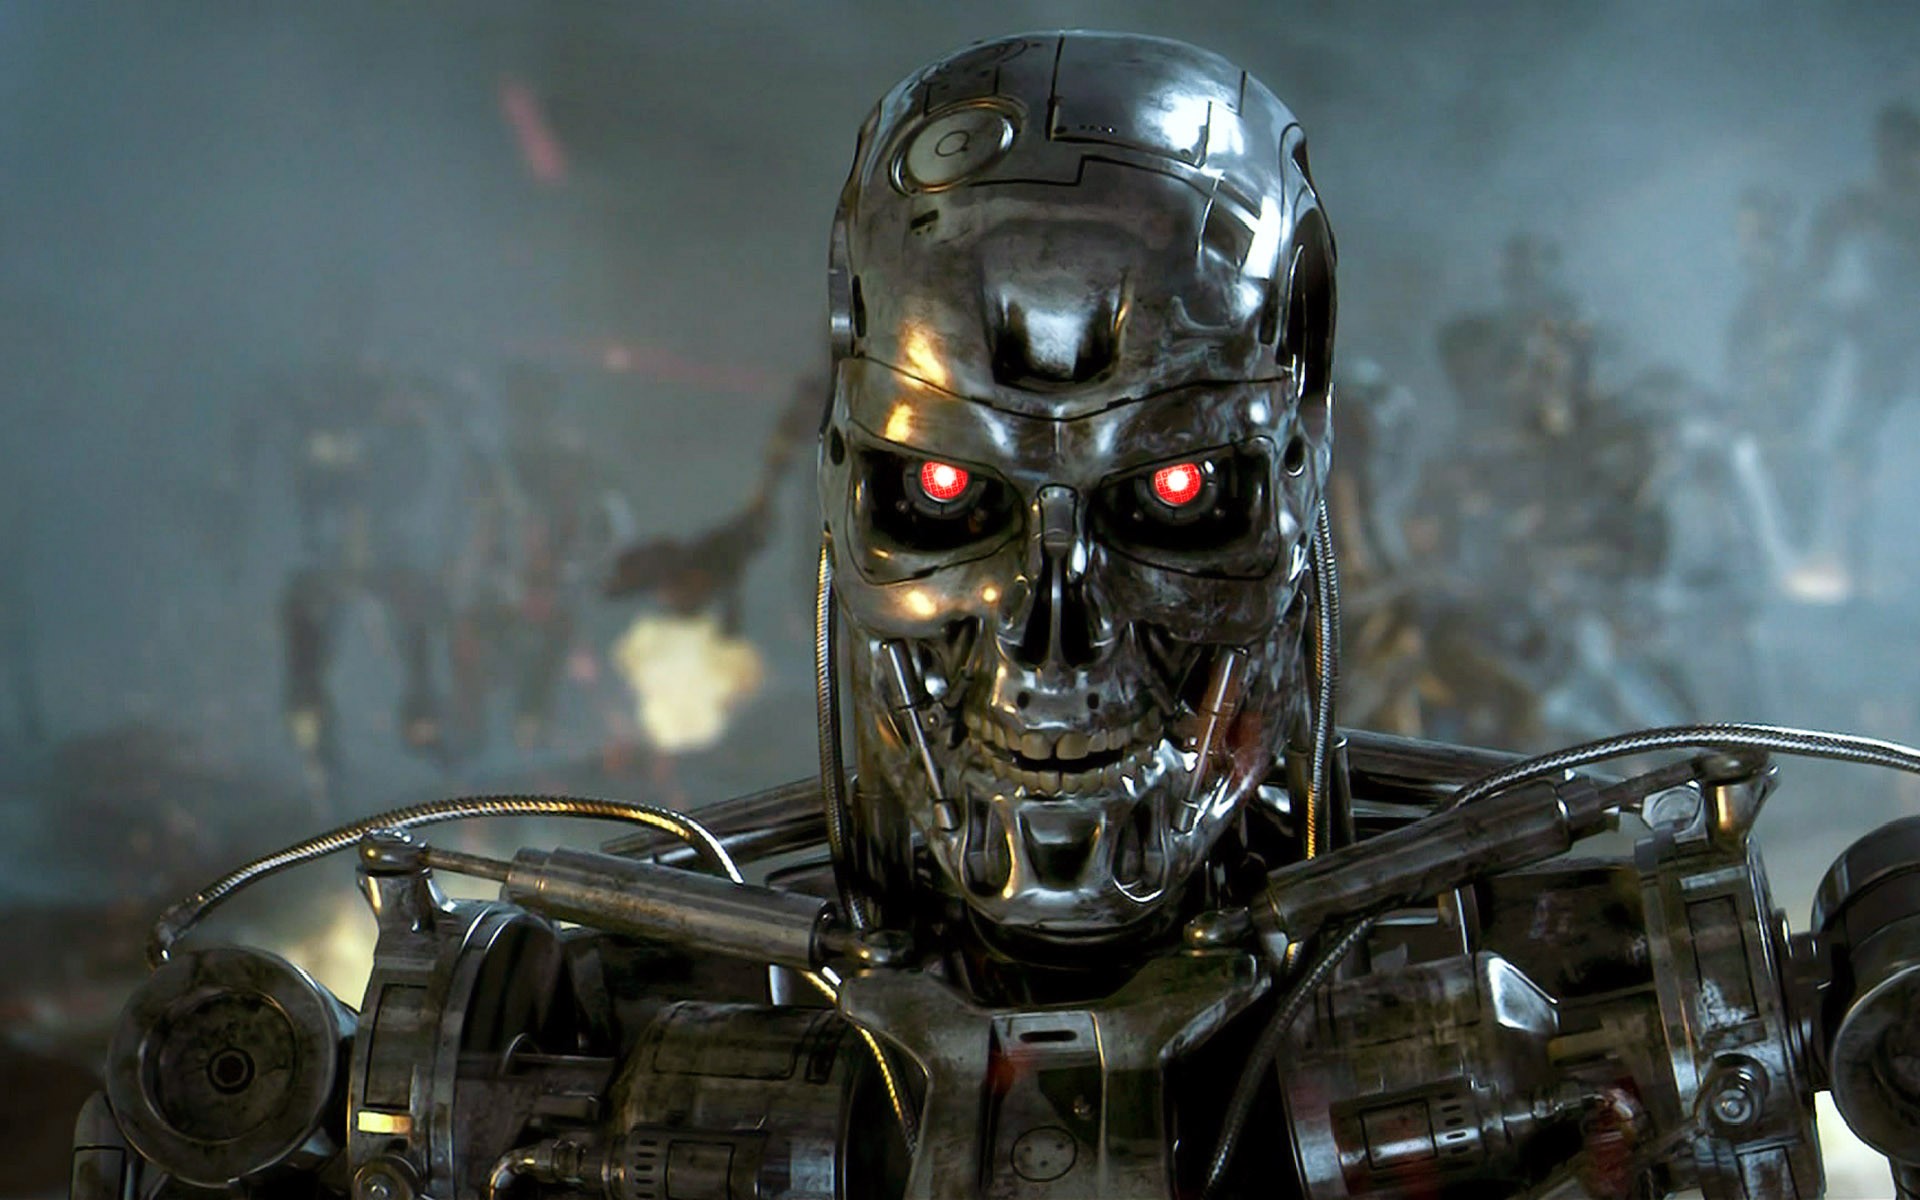 Terminator Rise of the Machines